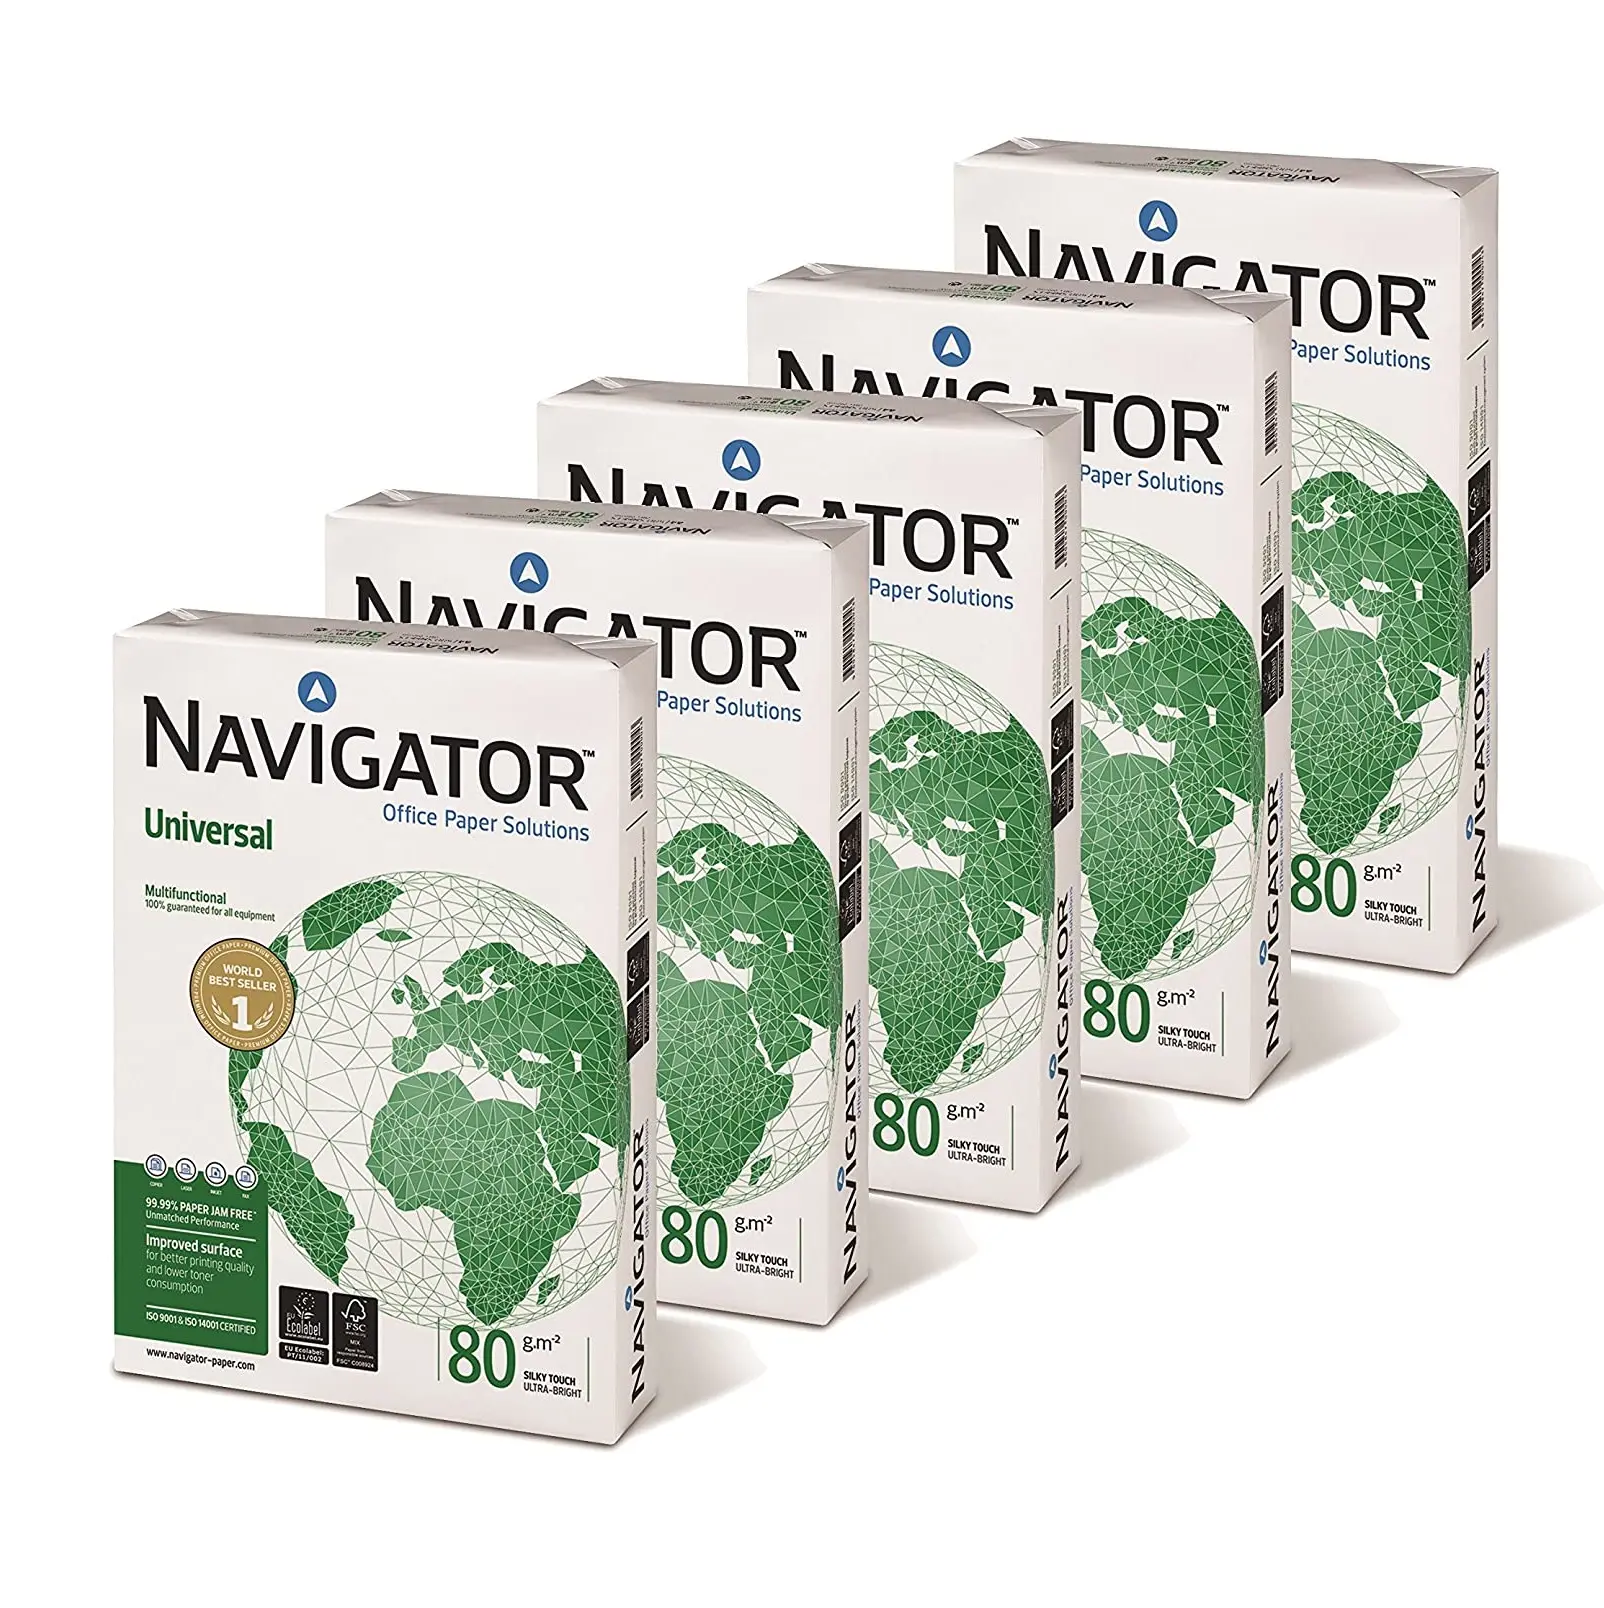 Navigator A4 Copy Thailand Copier carta per fotocopie, Navigator A4 Office Paper